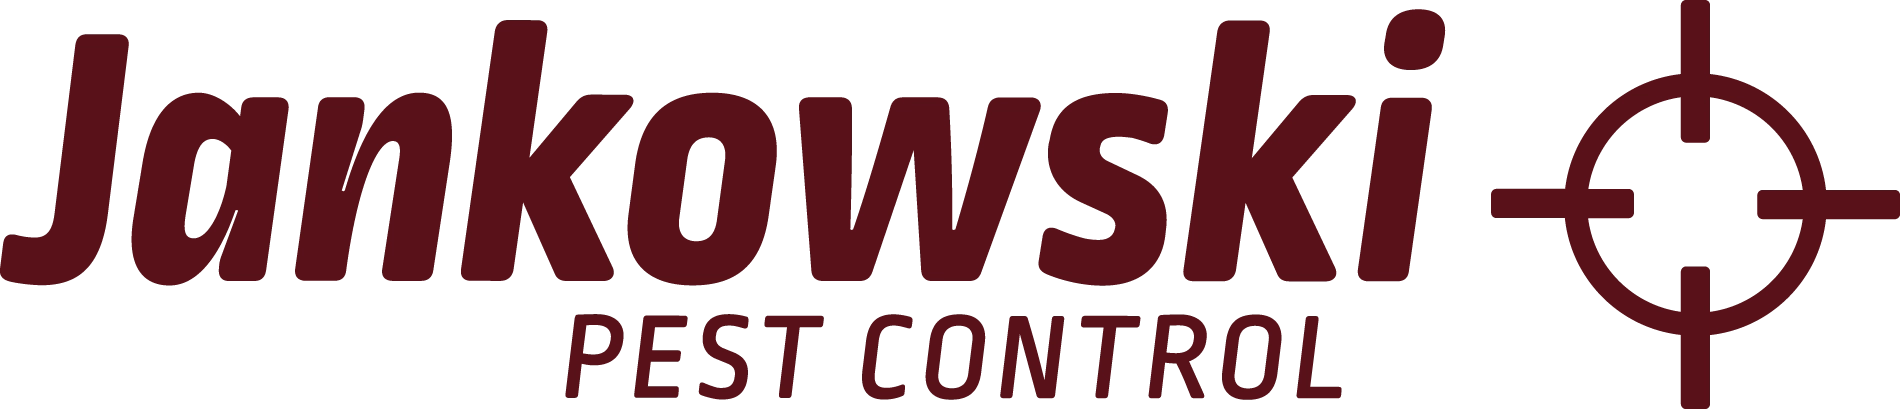 Jankowski Pest Control llc Logo